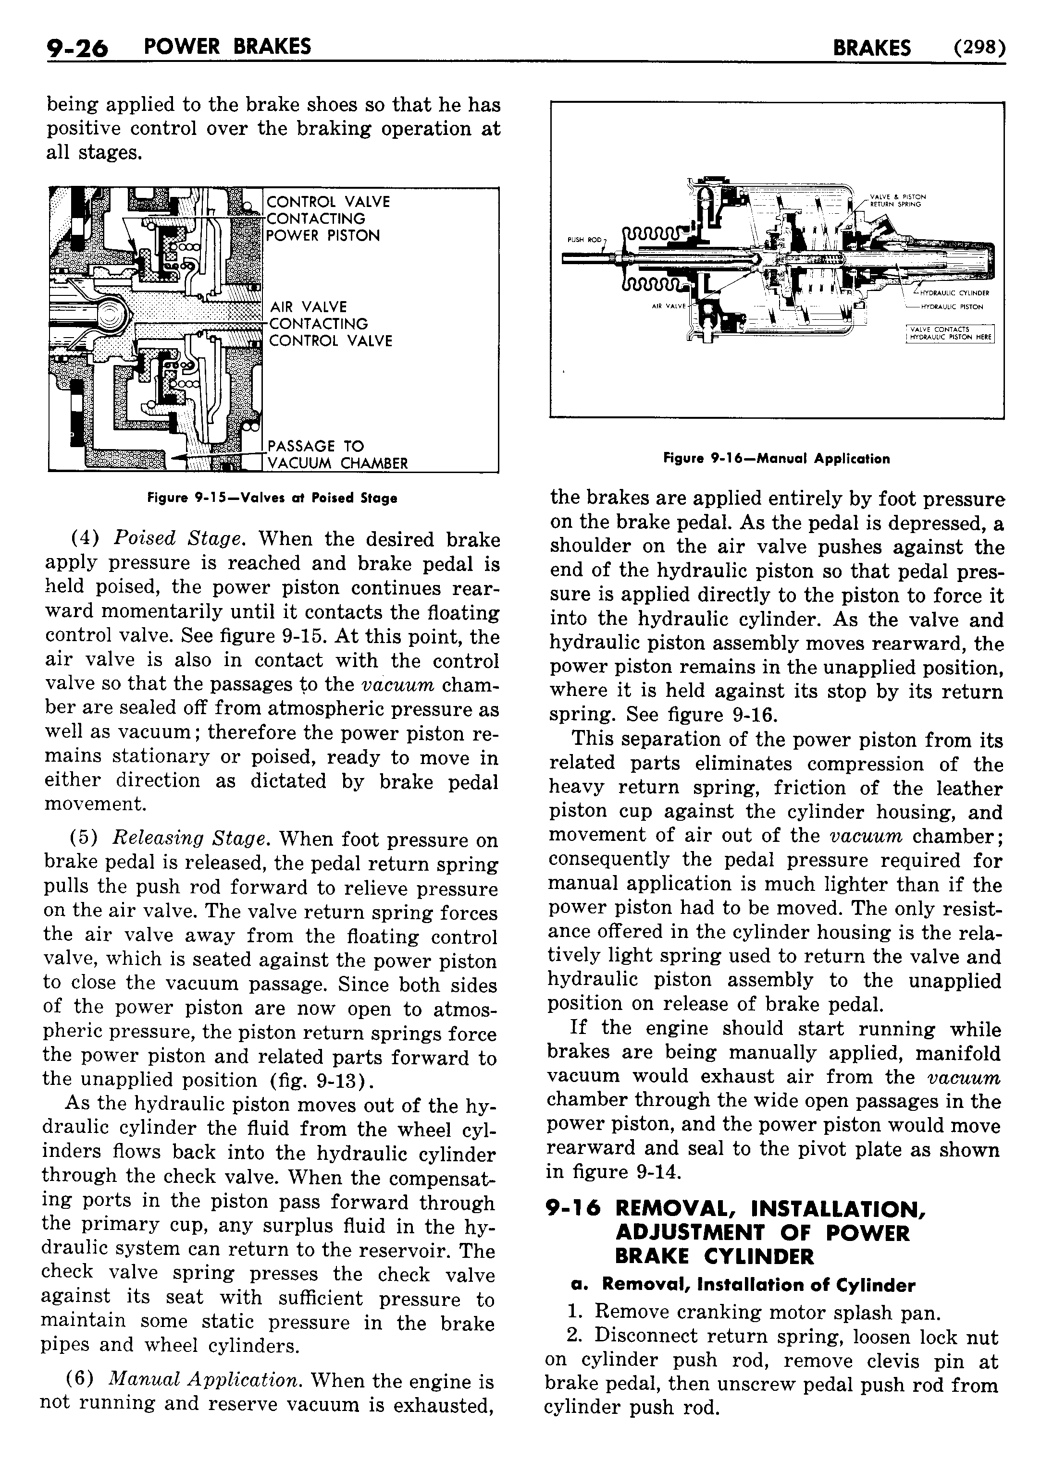 n_10 1955 Buick Shop Manual - Brakes-026-026.jpg